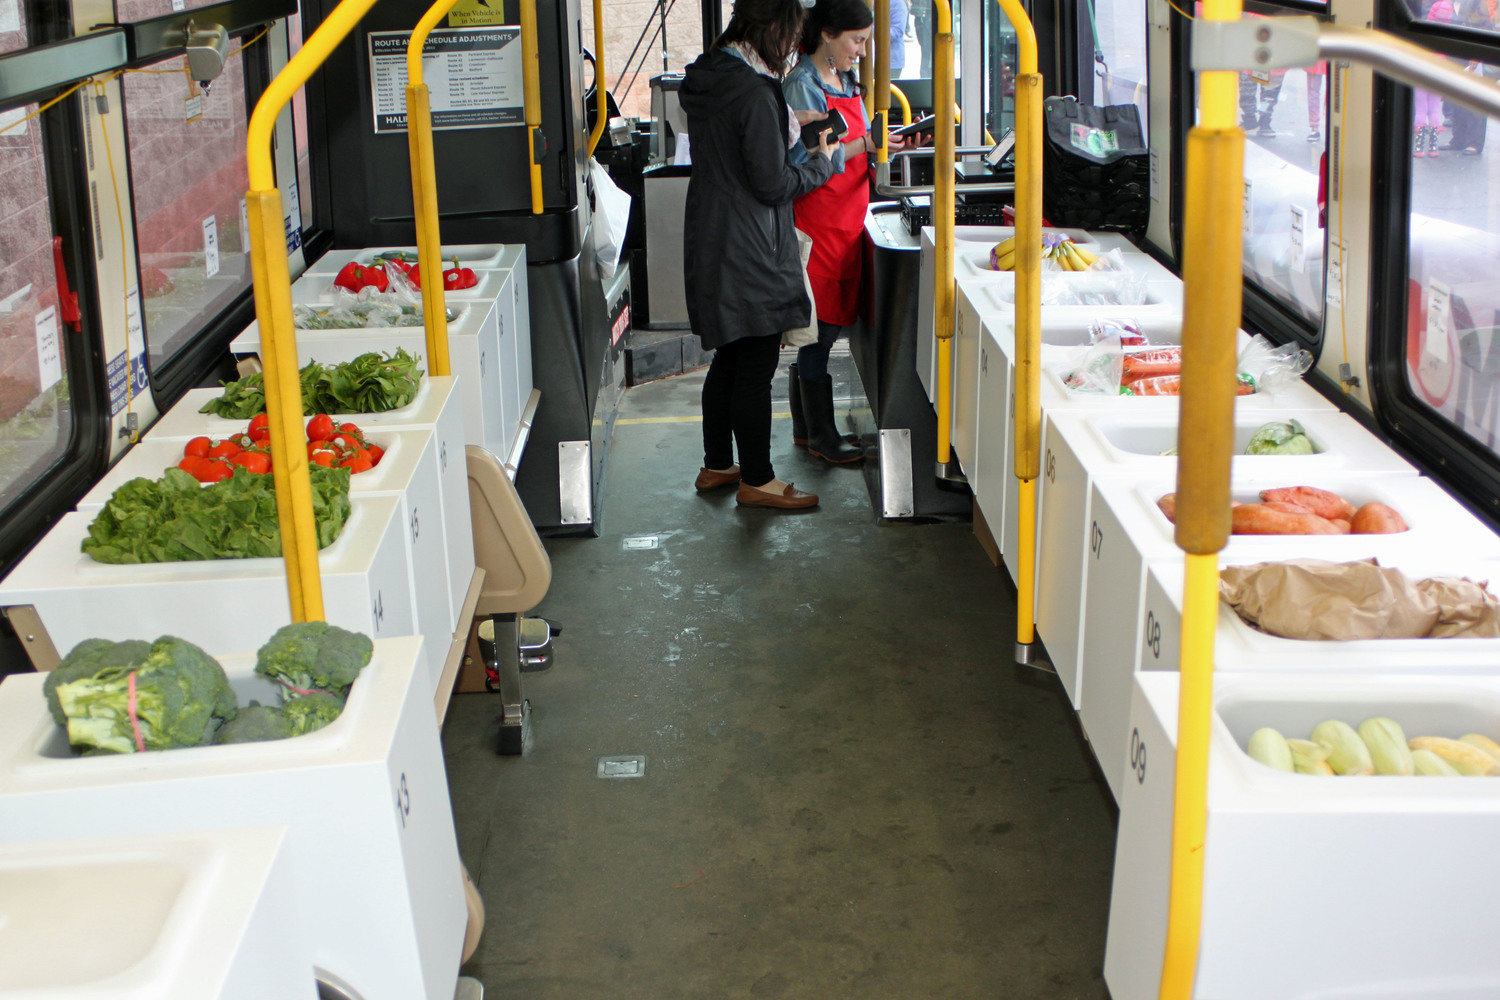 Halifax mobile food market